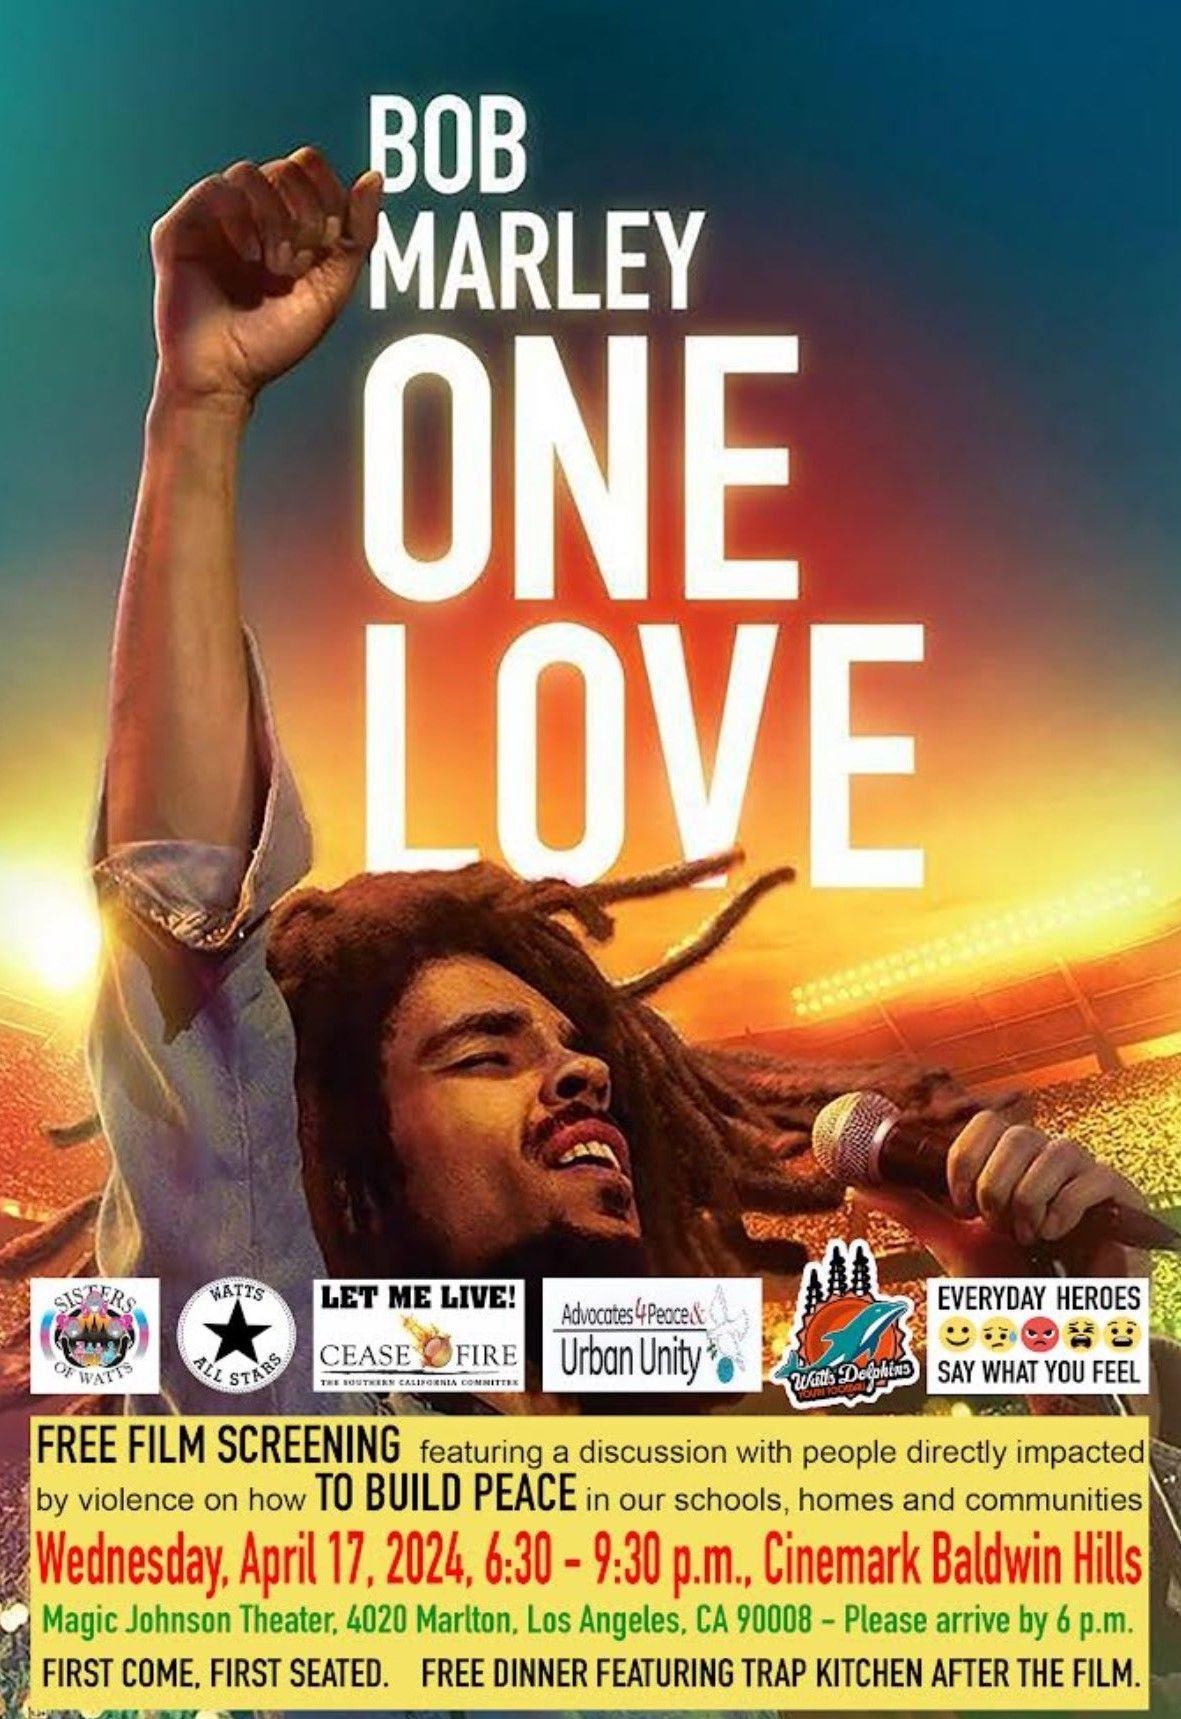 4/17 6pm, free meal and film screening of Bob Marley: One Love at Cinemark Baldwin Hills in LA